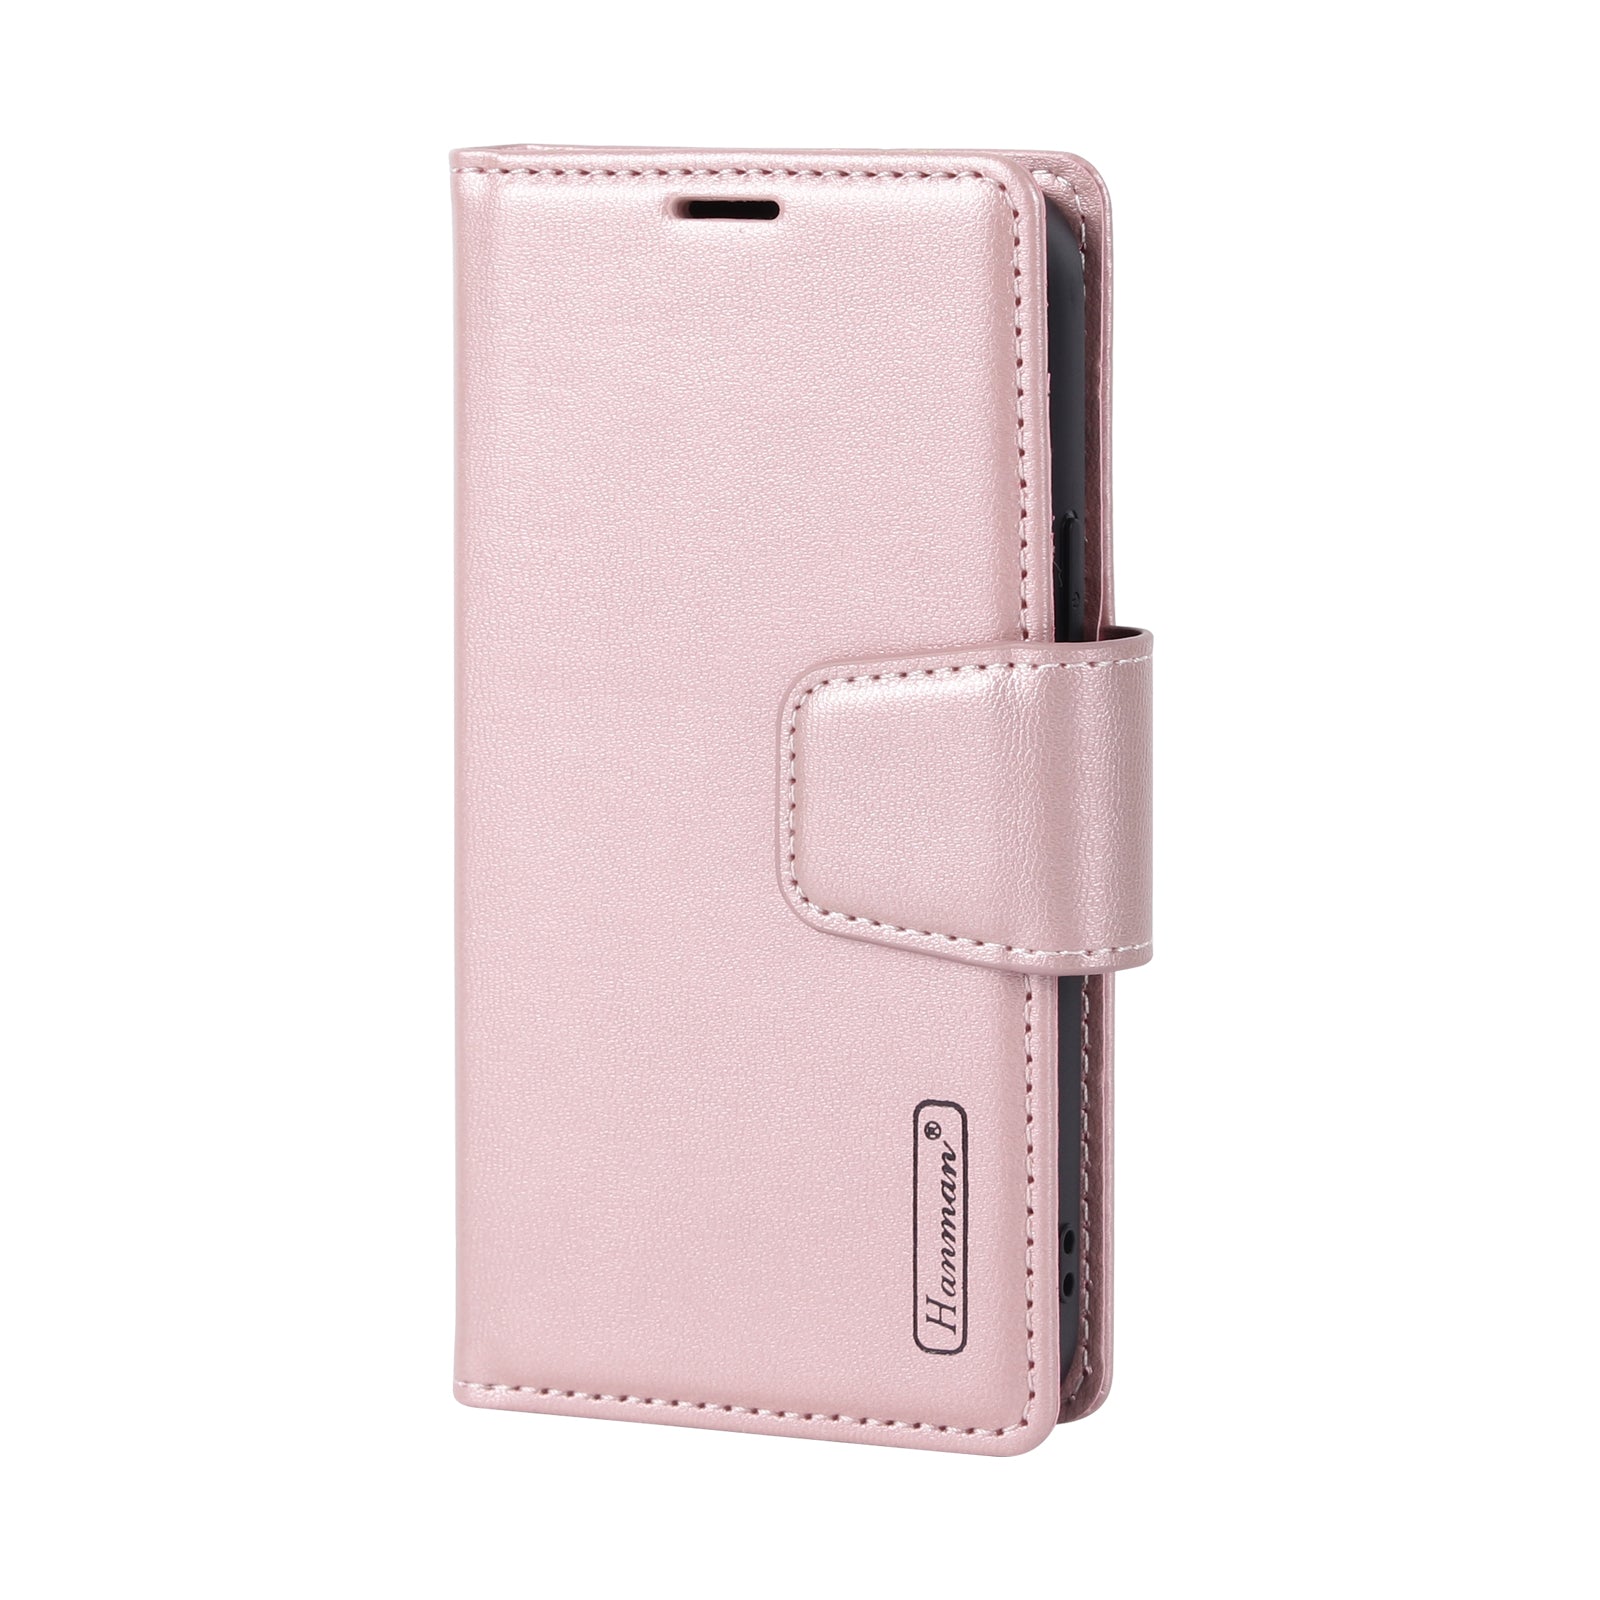 Hanman Flip Leather Wallet Case Rose Gold - iPhone Case